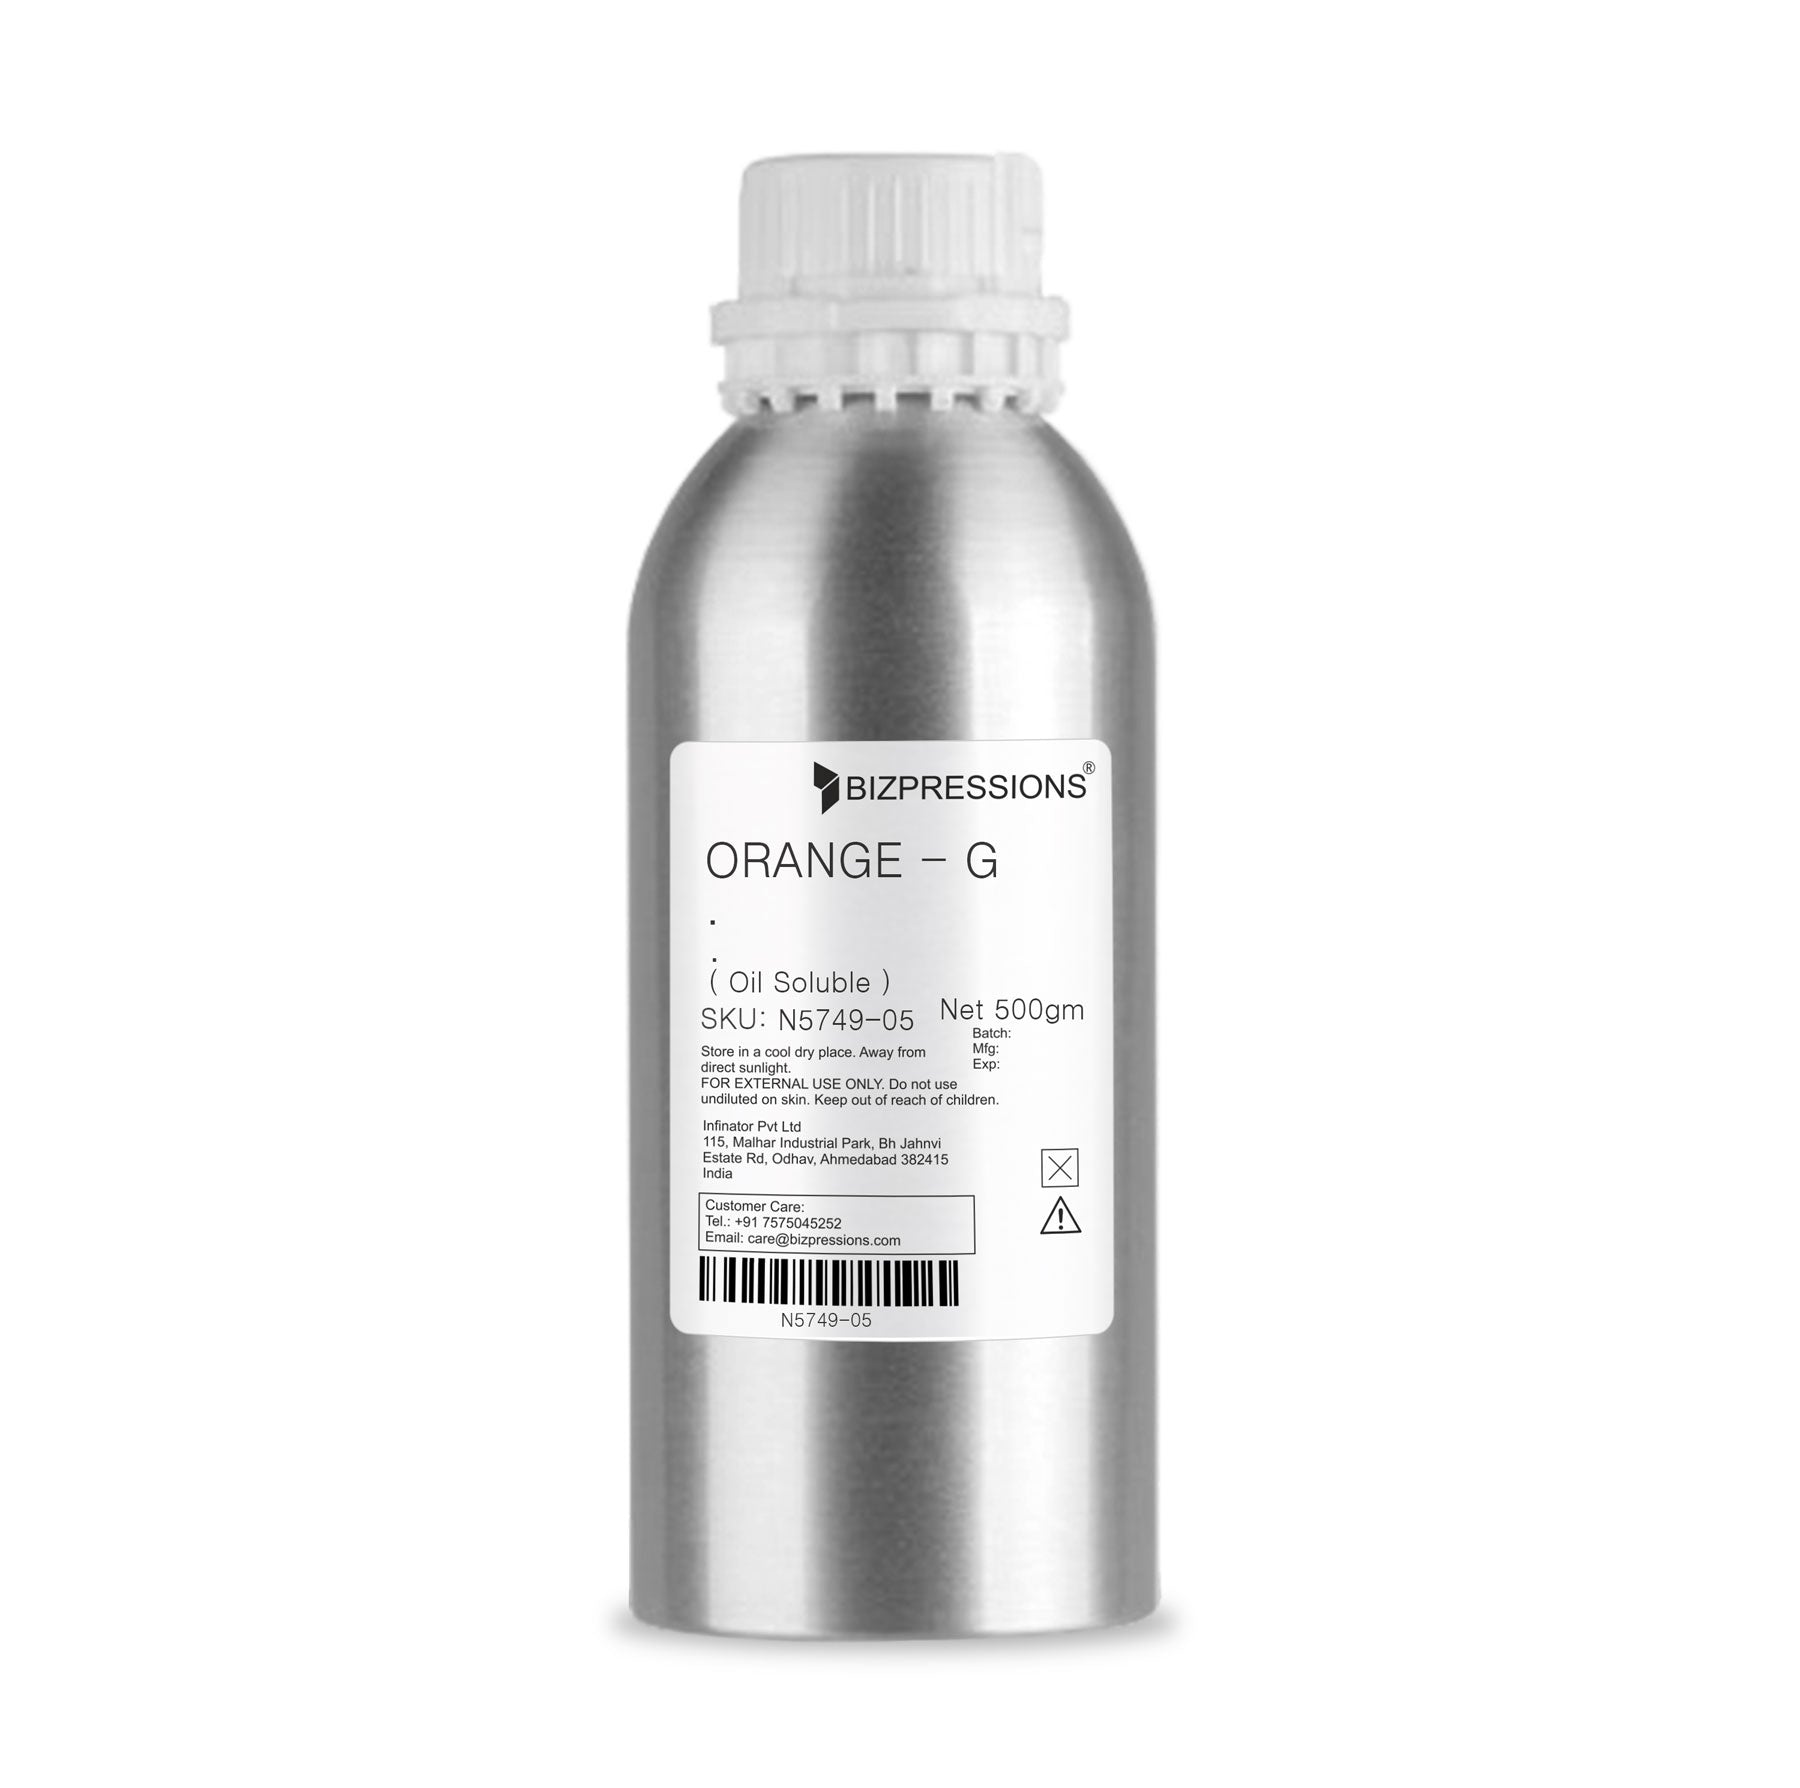 ORANGE - G - Fragrance ( Oil Soluble ) 500 gm